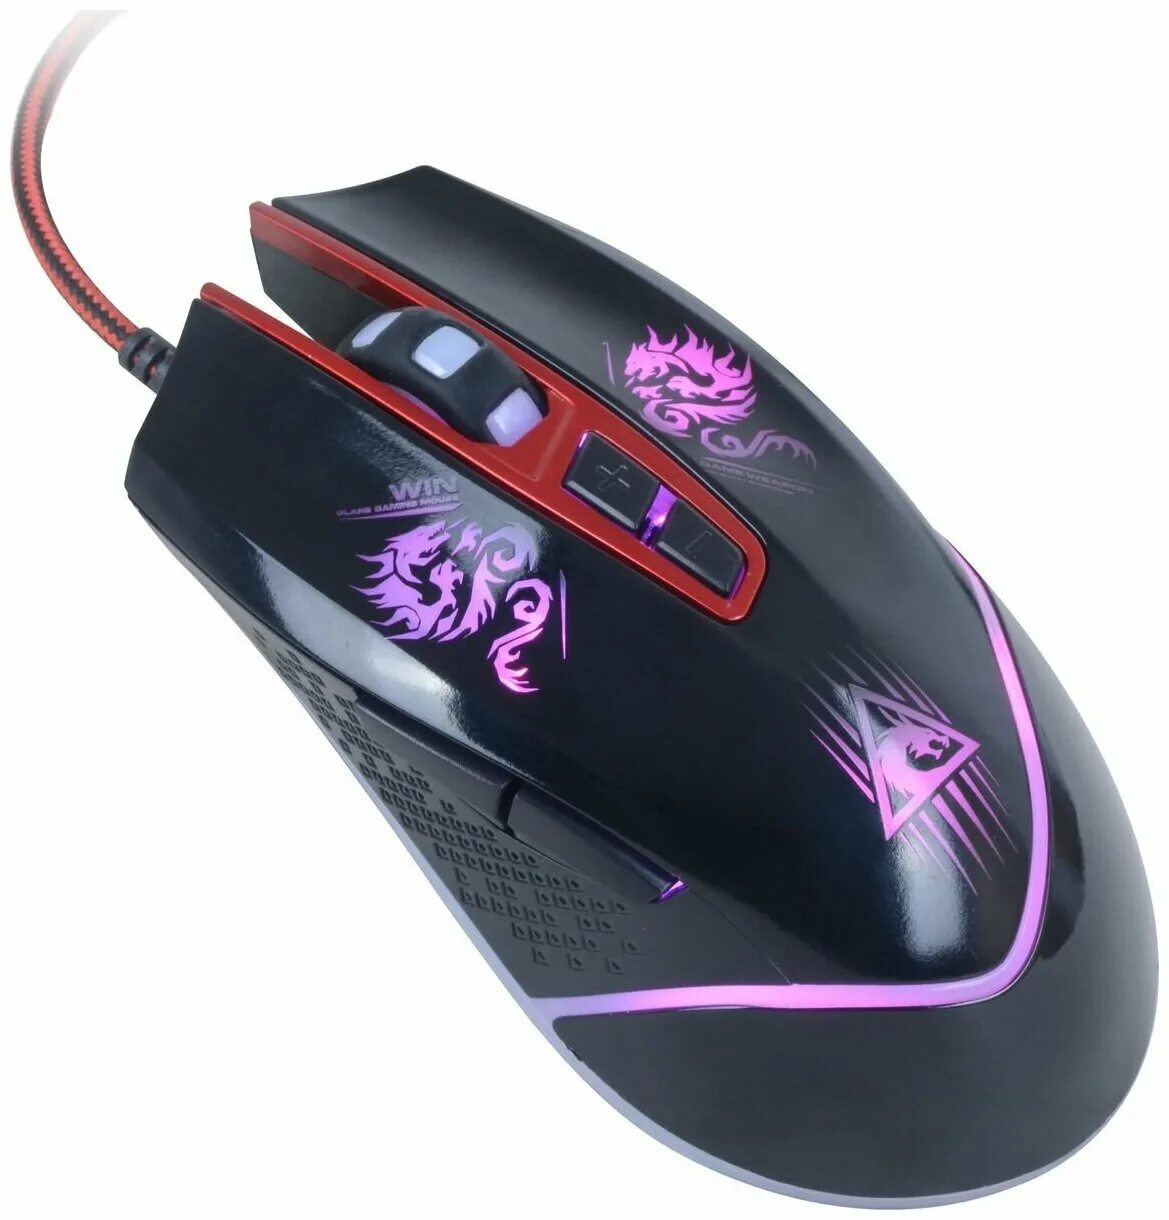 Xtrike me GM-502. GM 502 мышь. Геймерская мышь. Мышка компьютерная геймерская. Defender gm 502